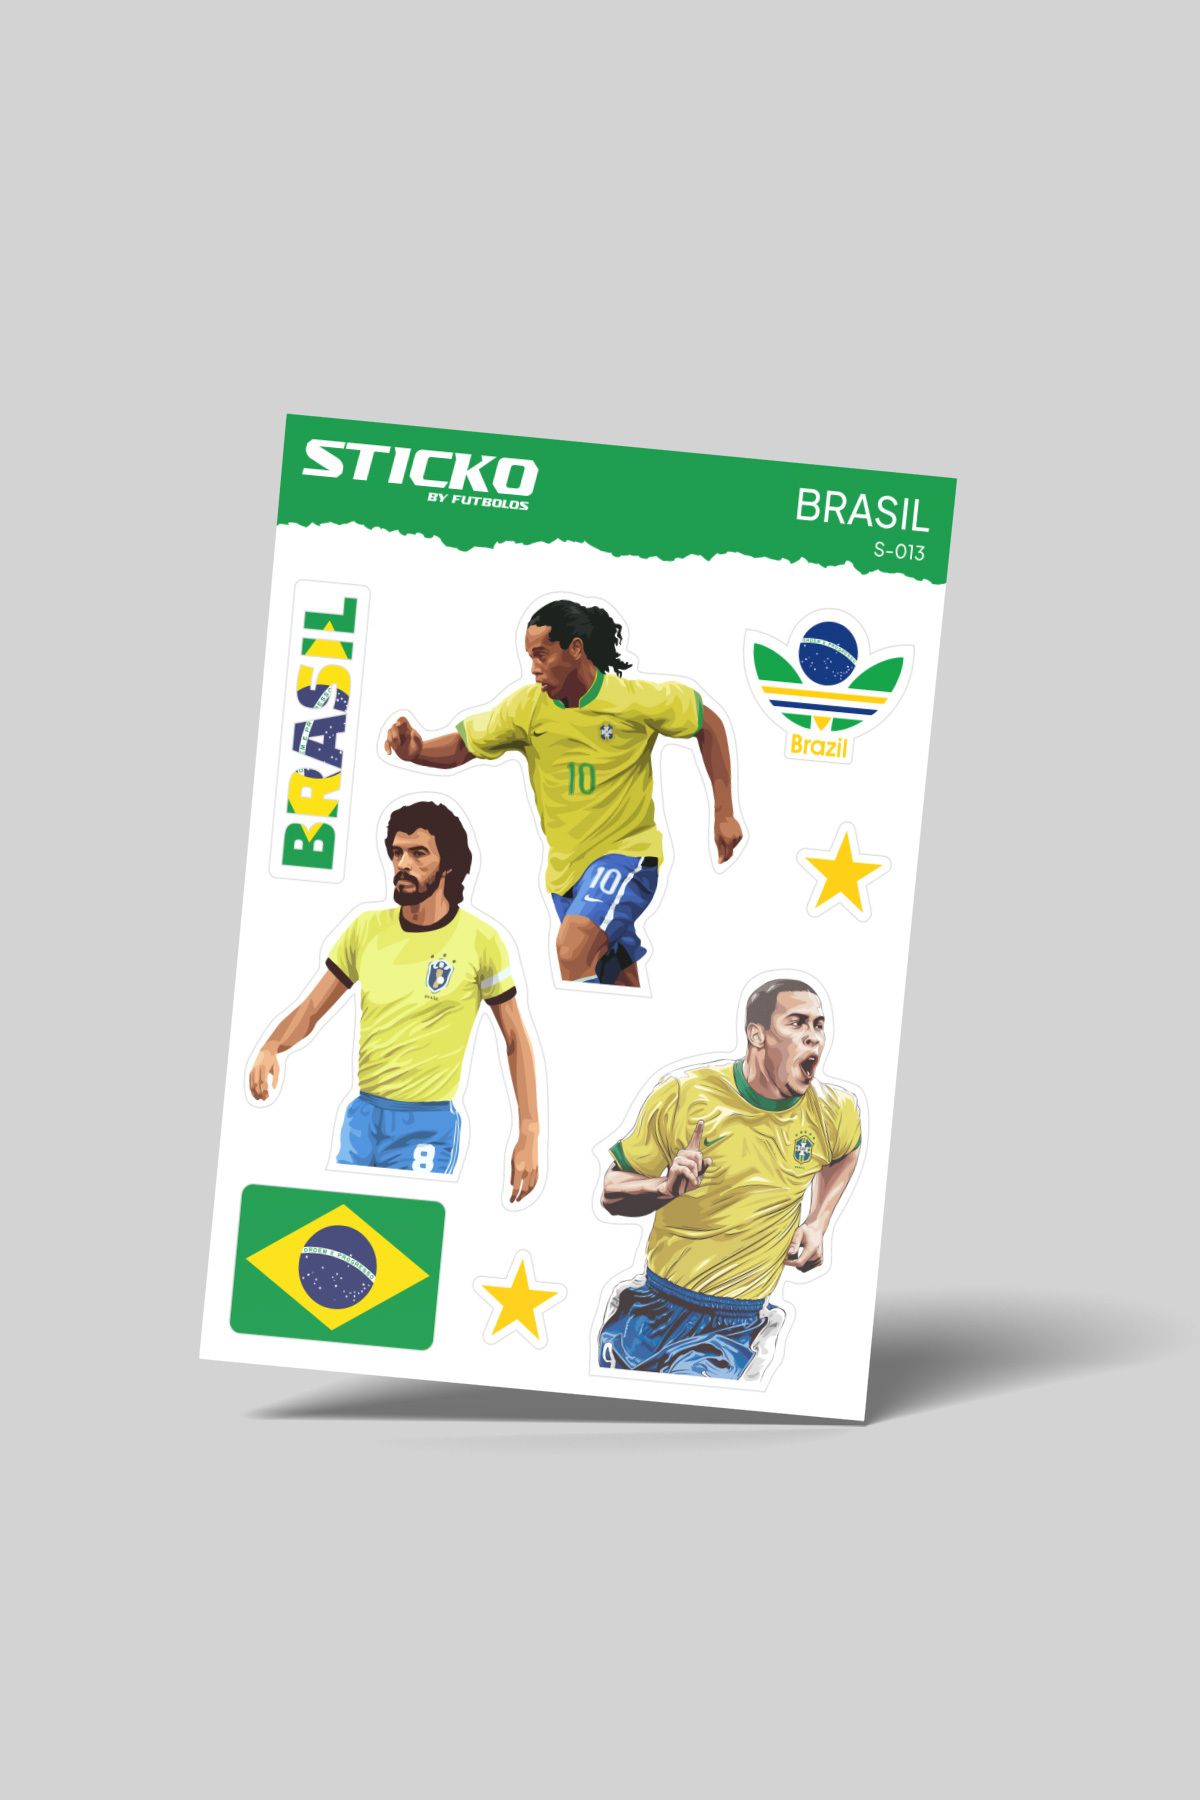 Futbolos Brezilyalı Efsaneler – Ronaldinho, Socrates, Ronaldo Etiket